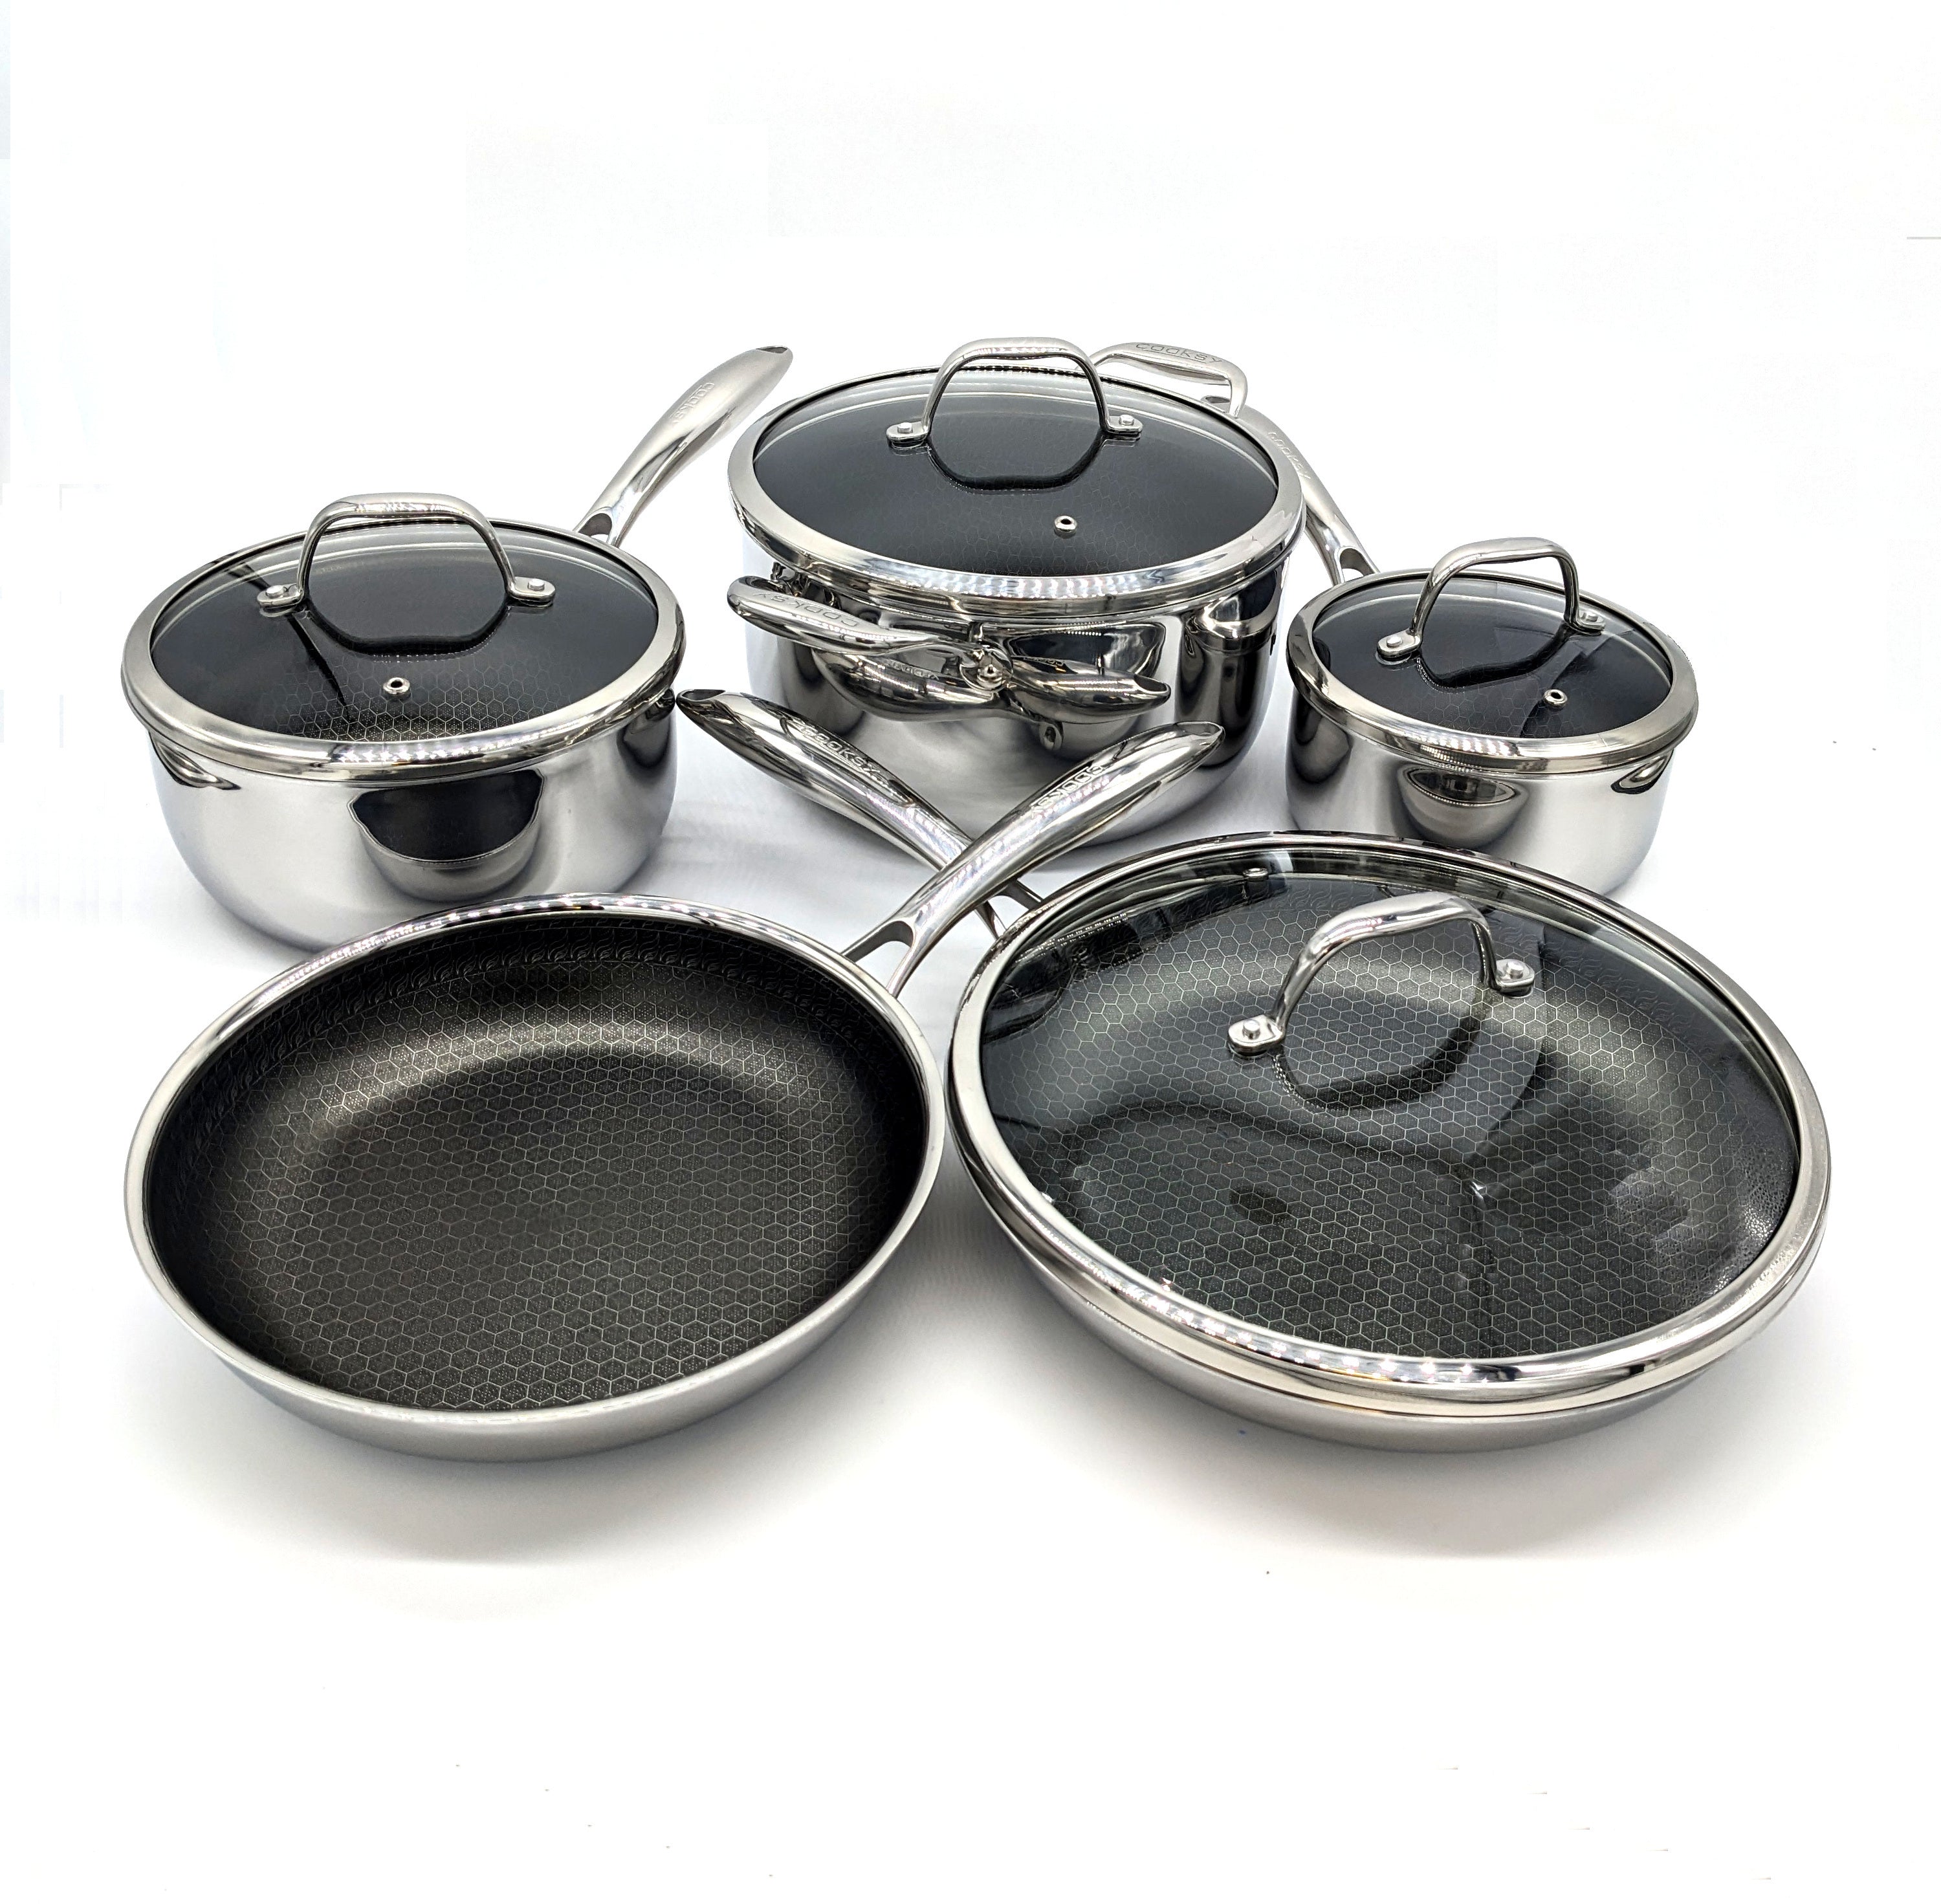 Complete your HexClad Hybrid 12pc Cookware Set Today! – HexClad Cookware